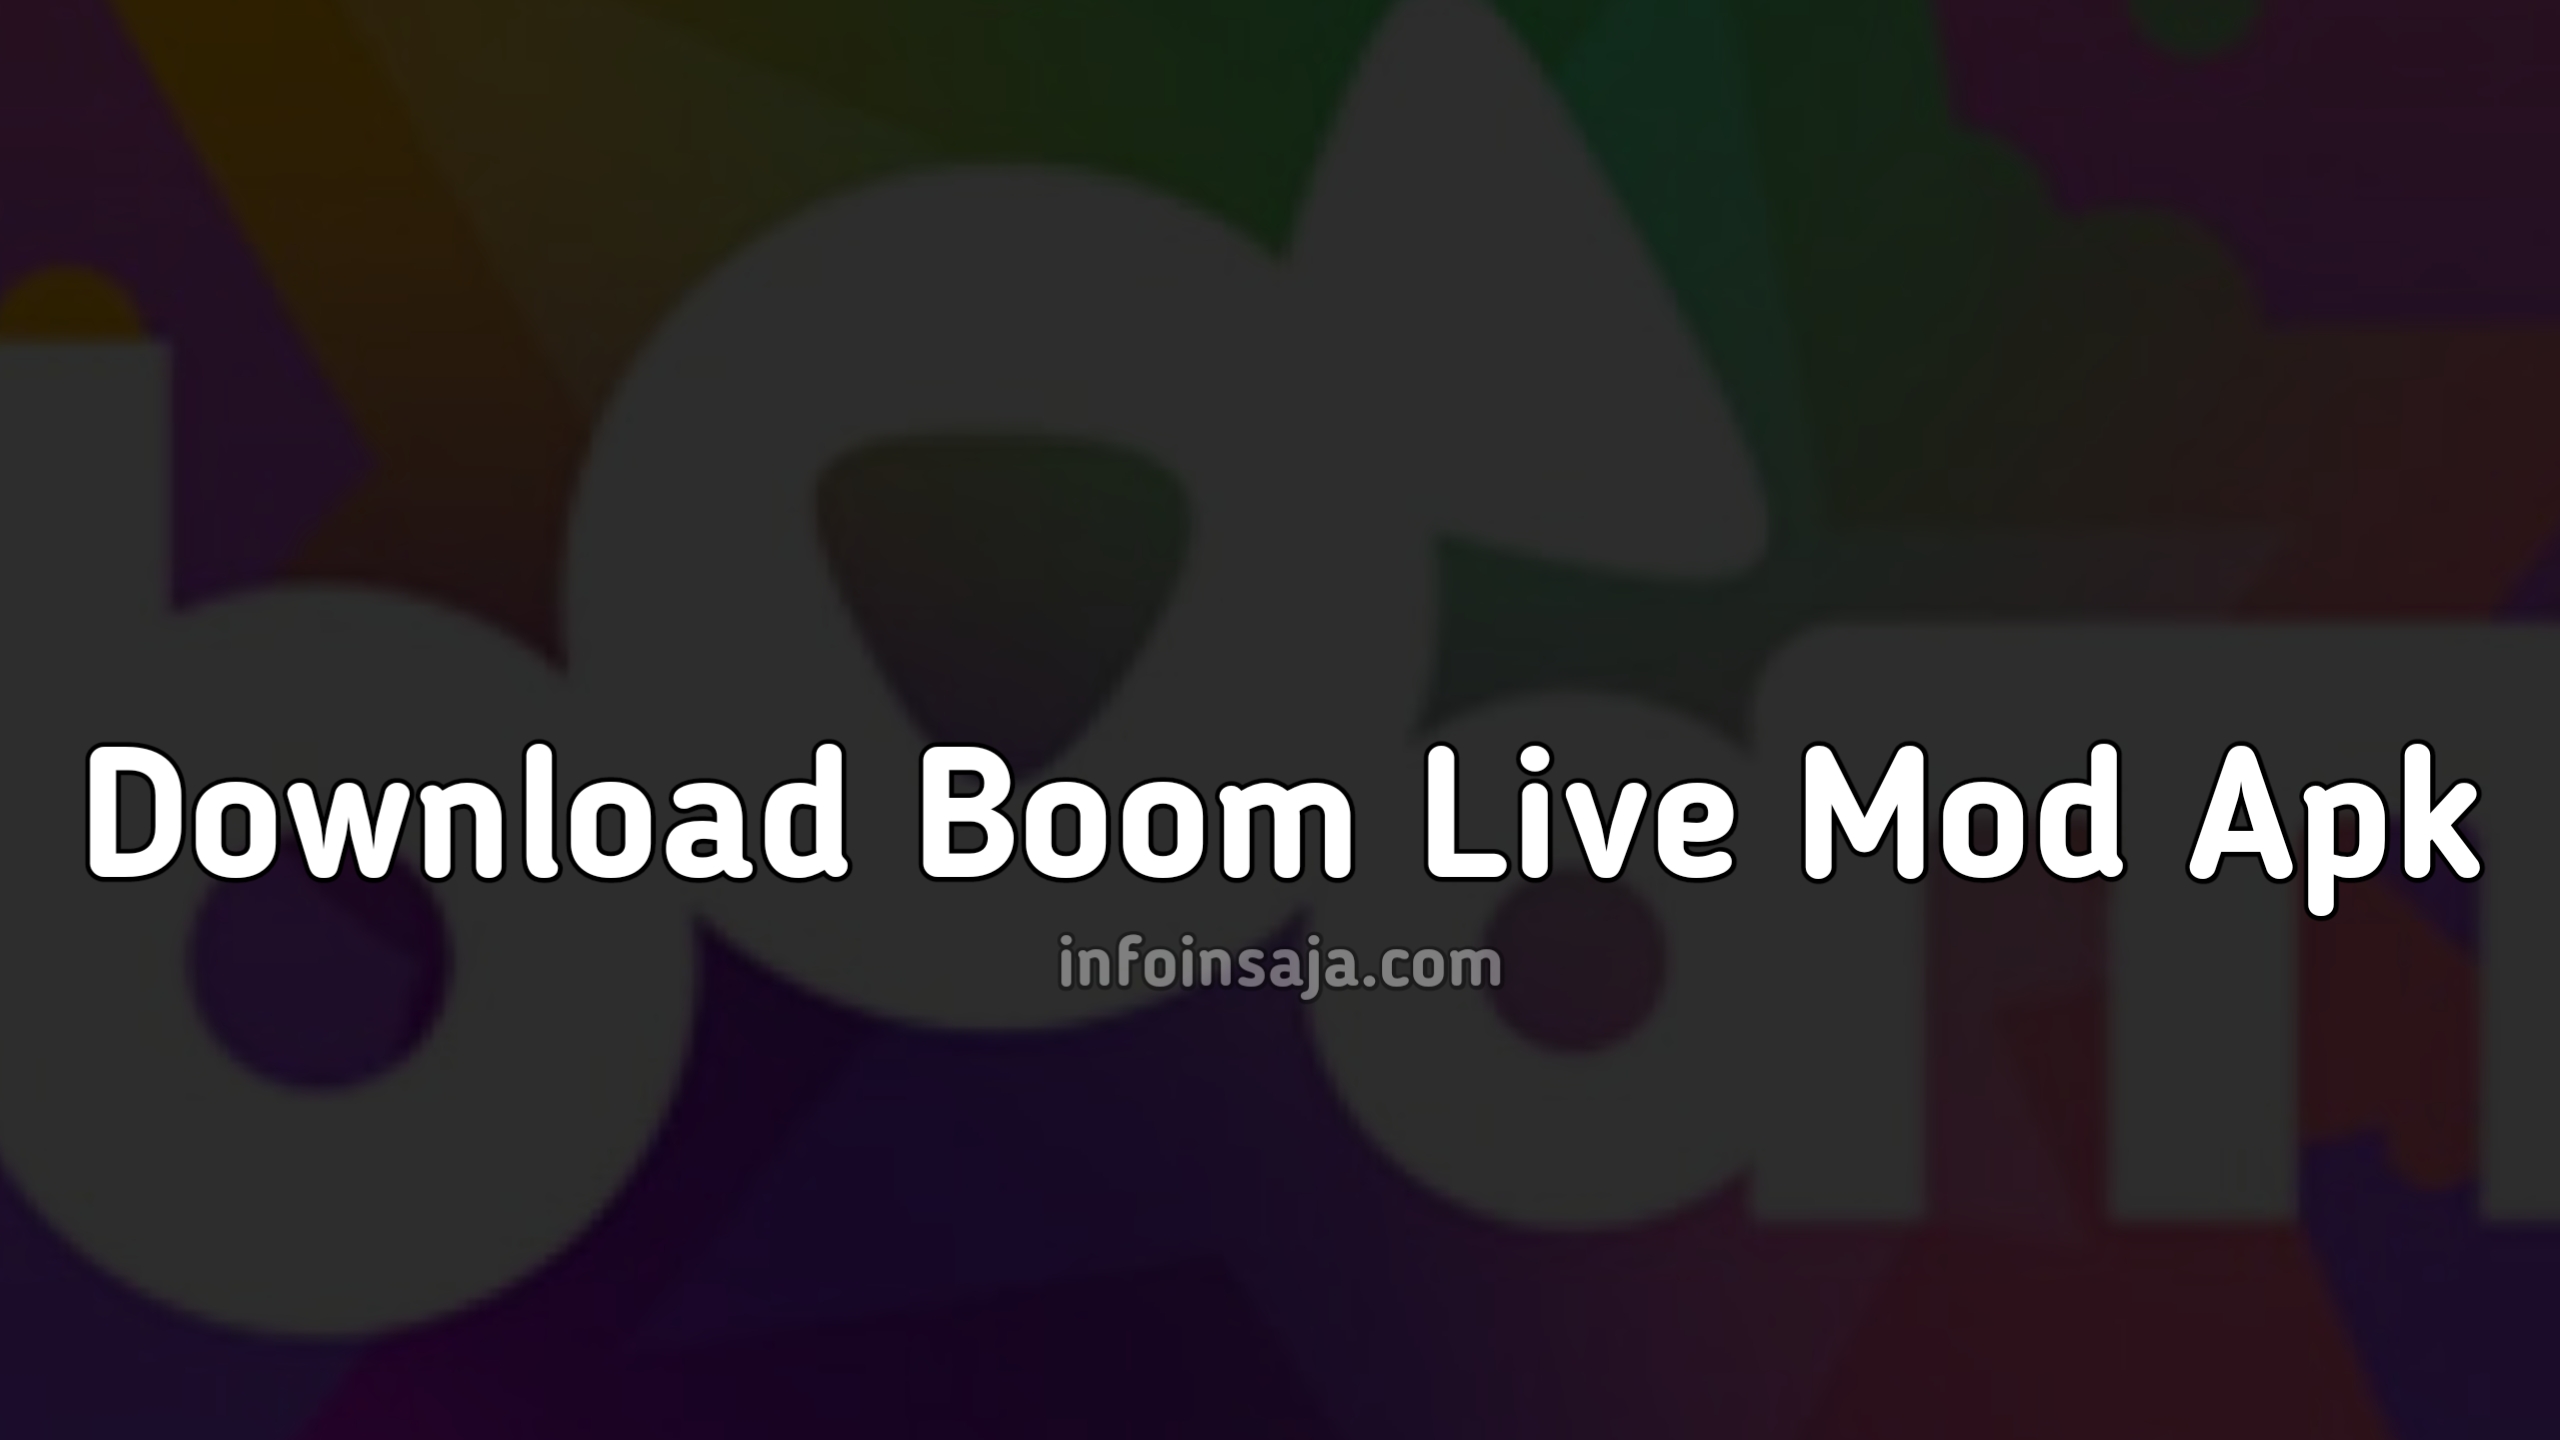 Download Boom Live Mod Apk